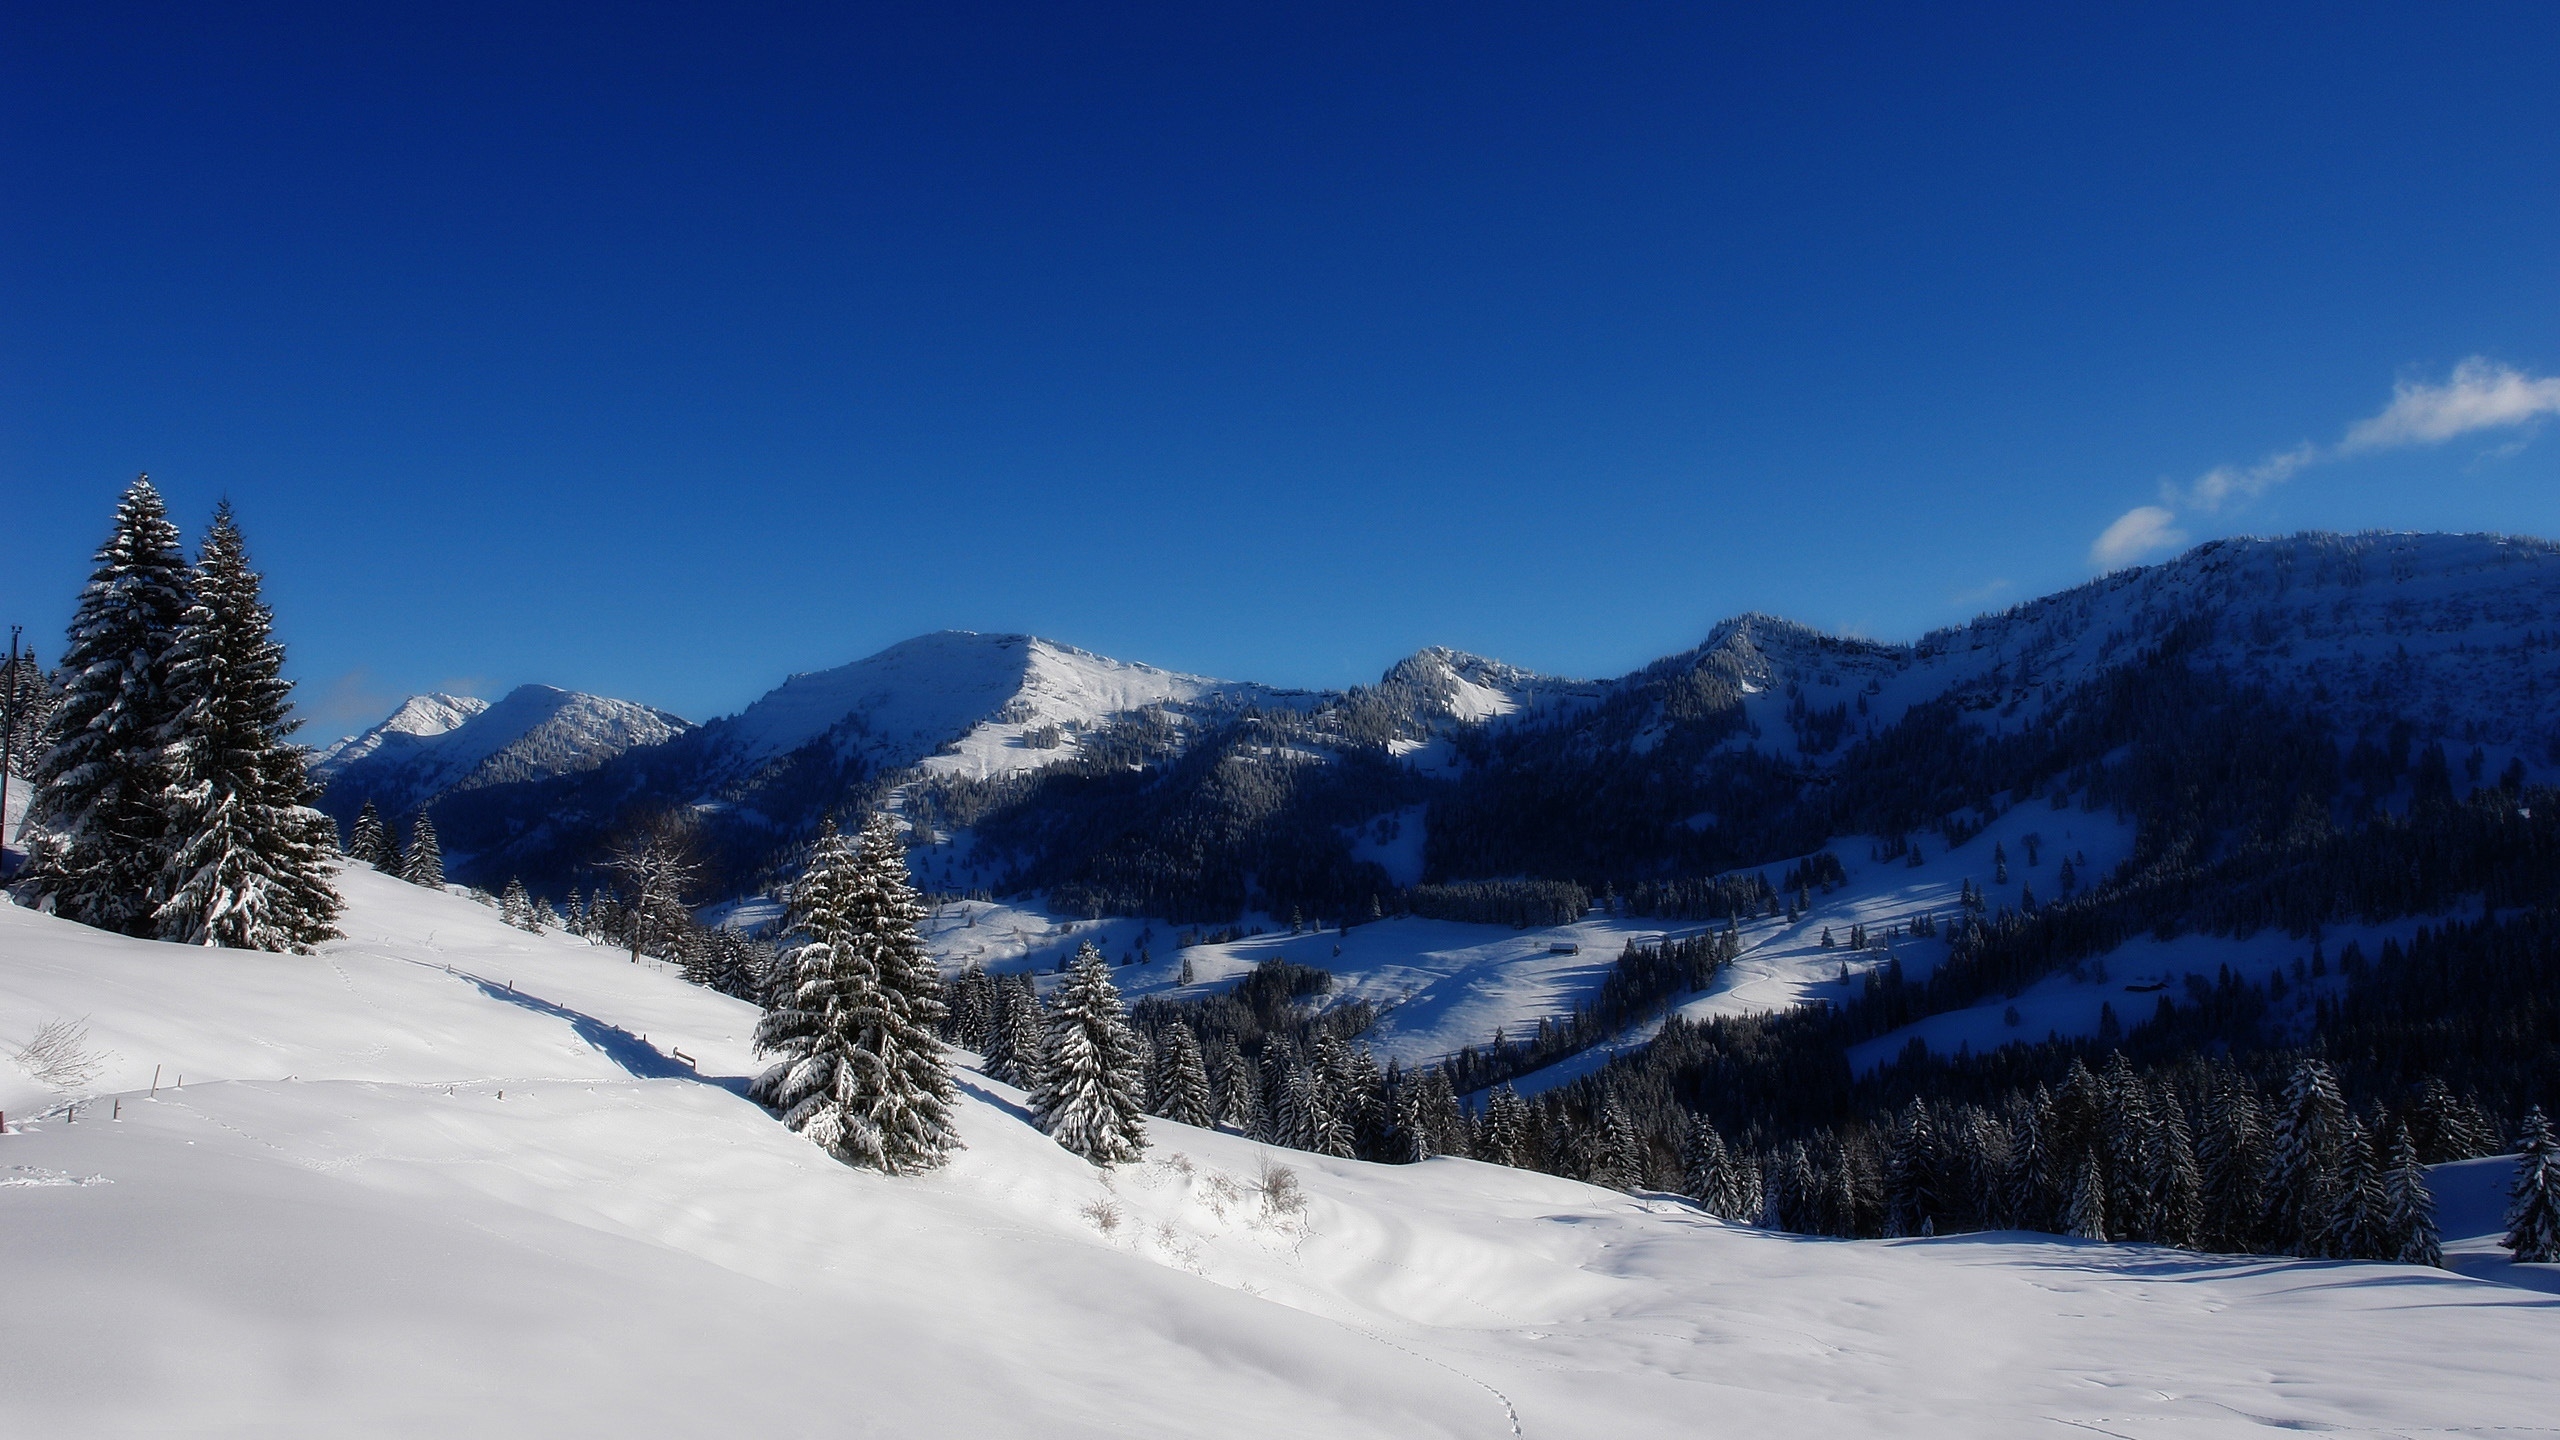 Blue sky in Winter for 2560x1440 HDTV resolution